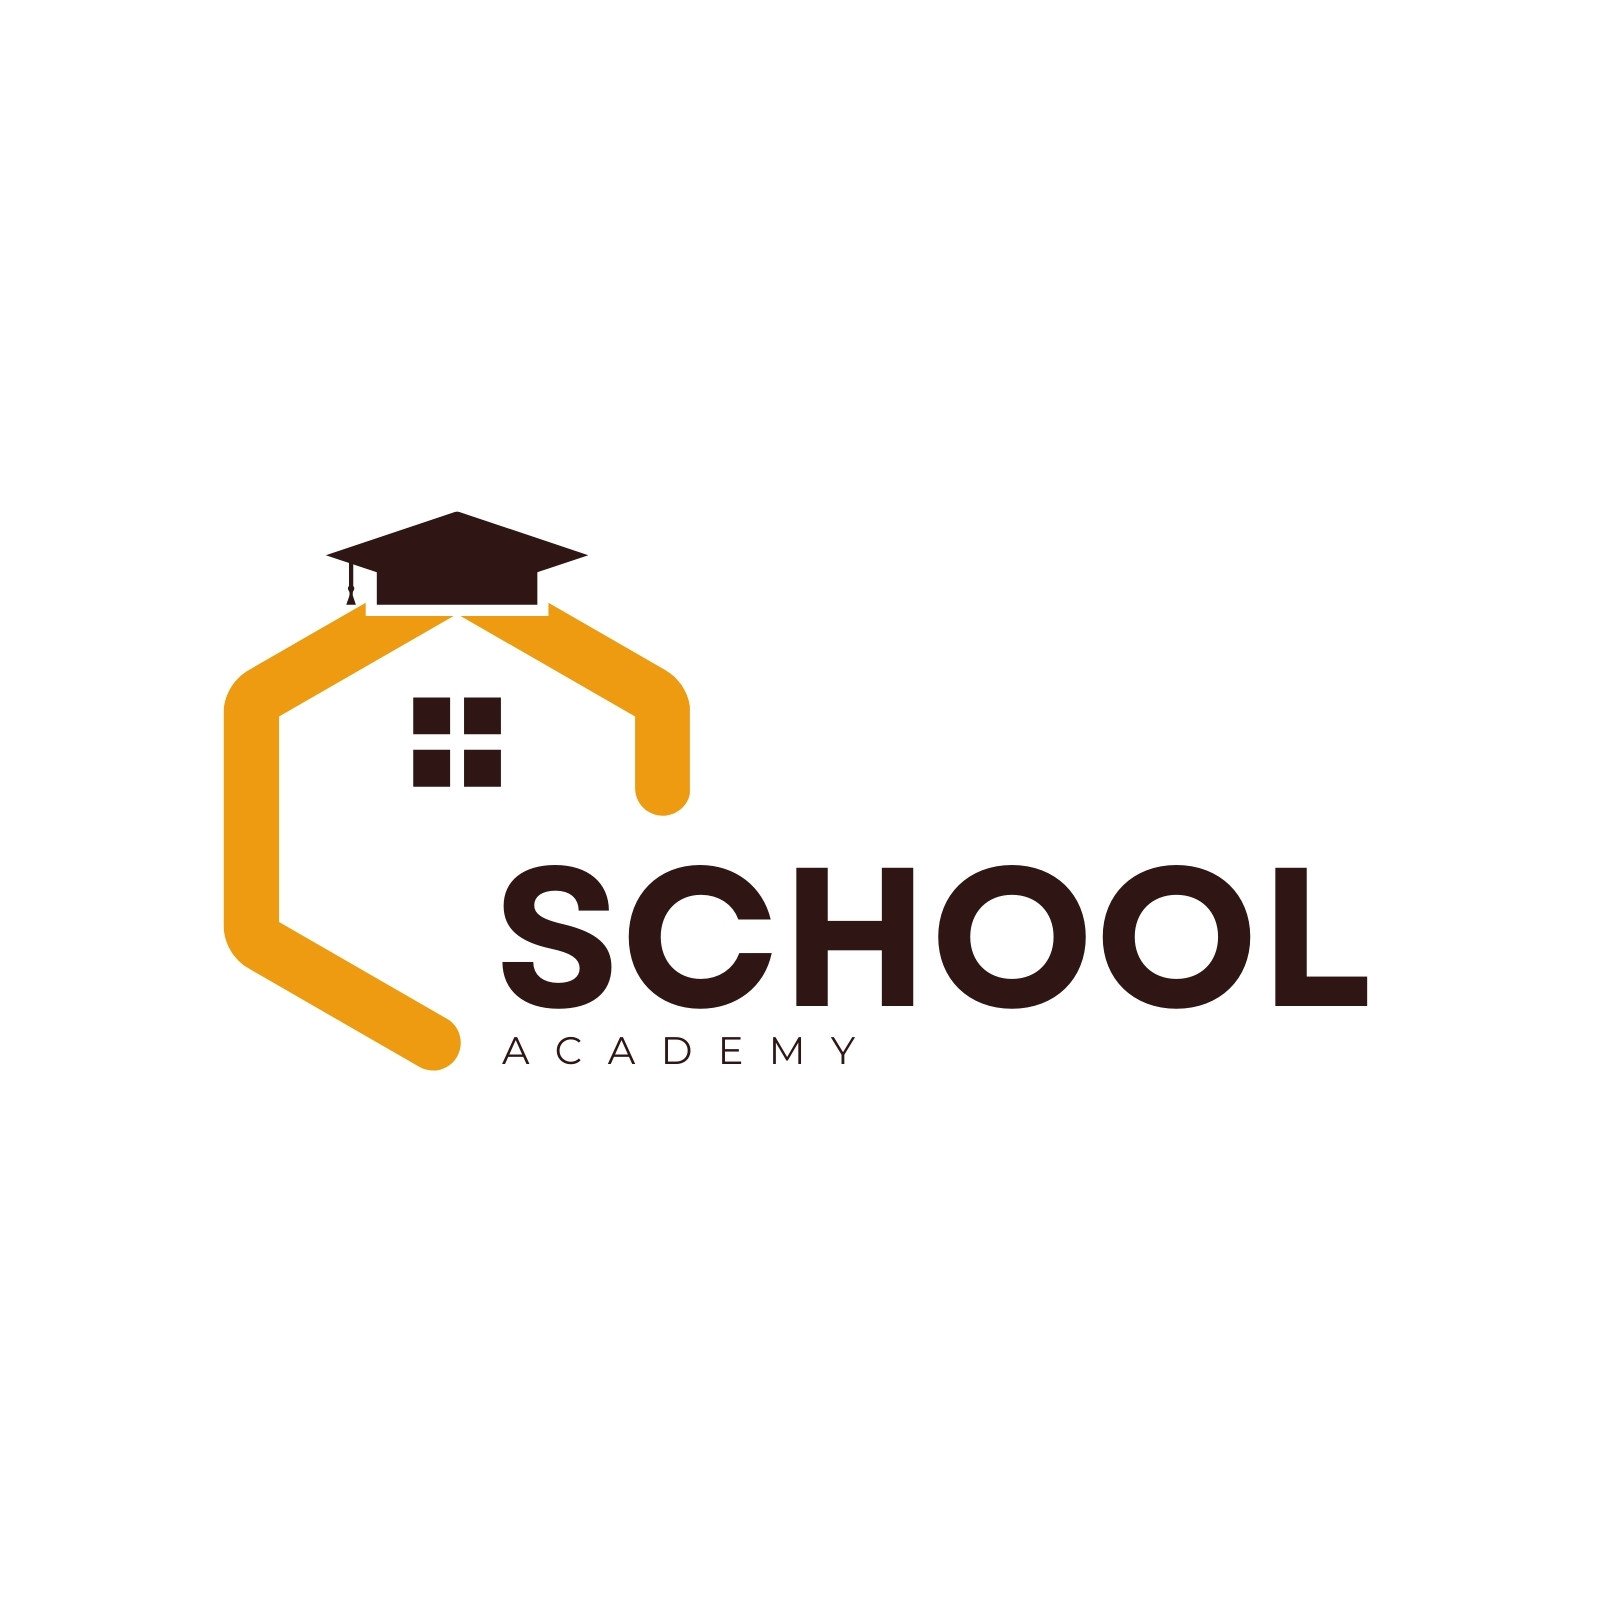 school logos images